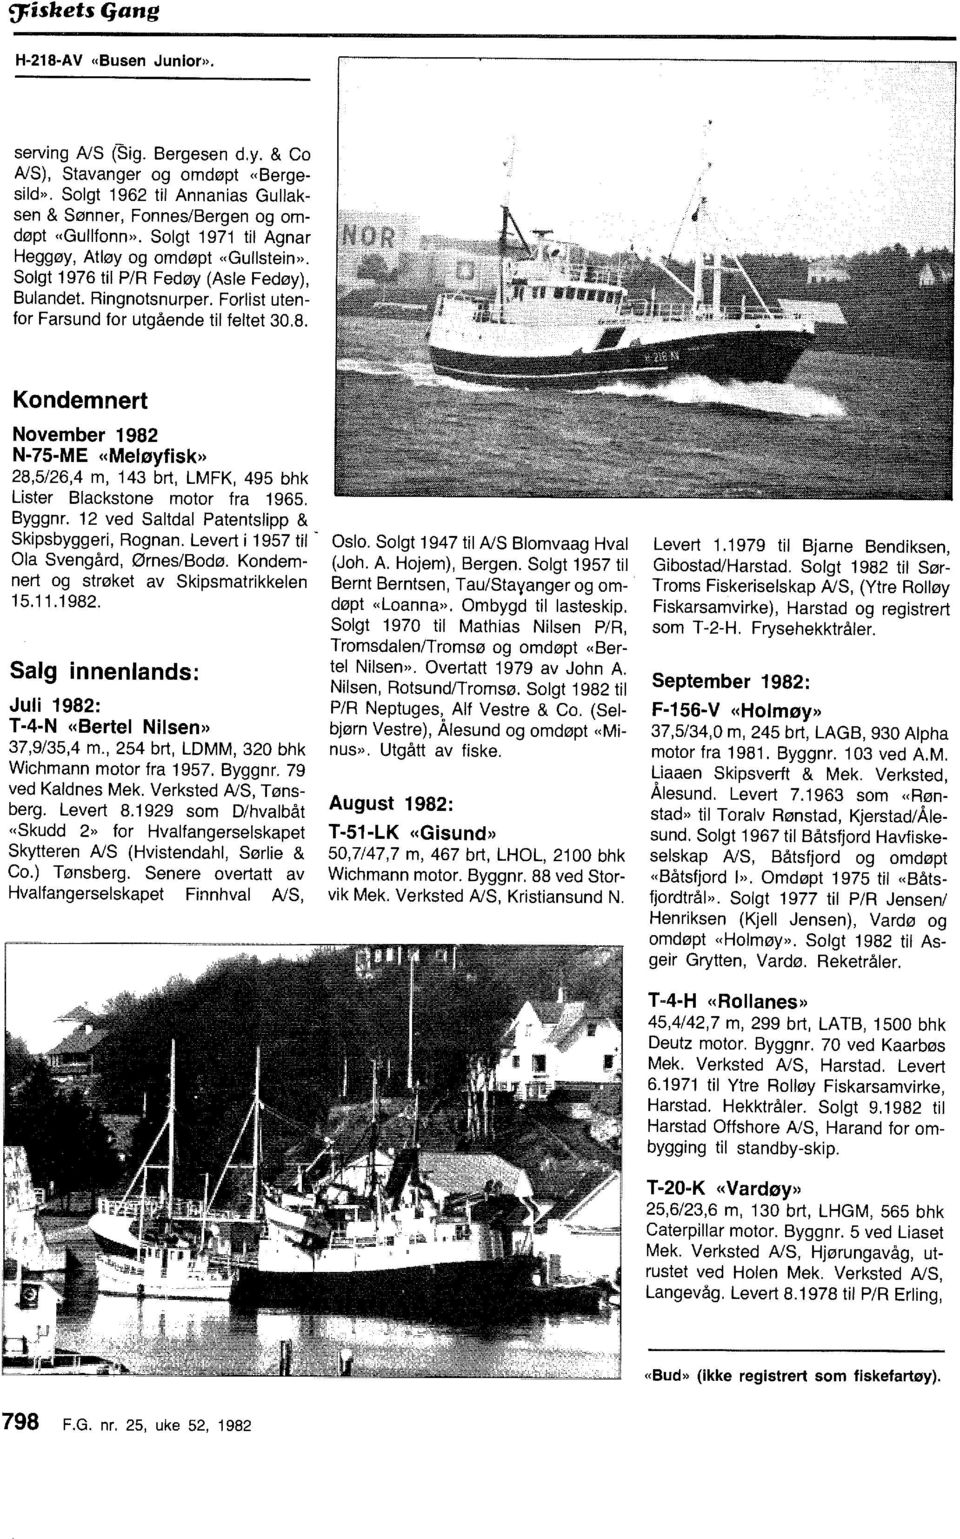 Kndemnert Nvember 1982 N-75-ME «Meløyfisk» 28,5/26,4 m, 143 brt, LMFK, 495 bhk Lister Blackstne mtr fra 1965. Byggnr. 12 ved Saltdal Patentslipp & Skipsbyggeri, Rgnan.